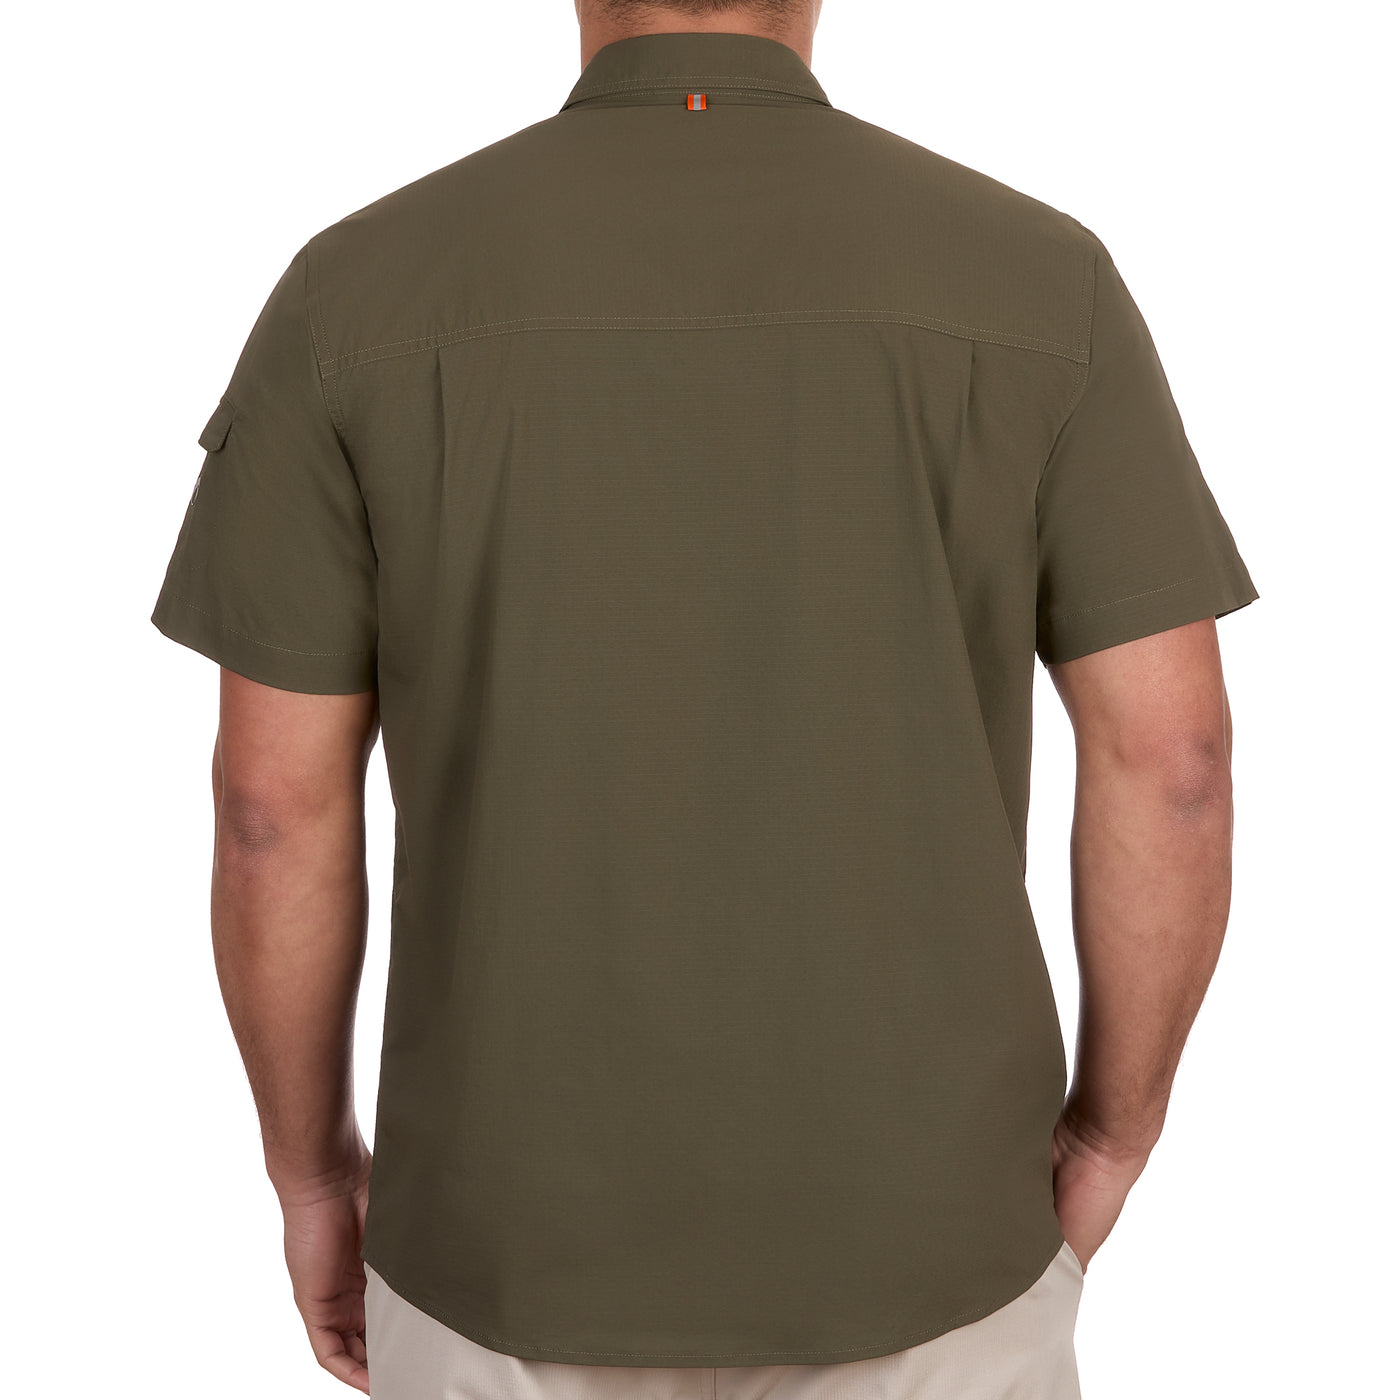 Blackfoot River Short Sleeve Fishing Shirt for lake bass ocean pier boat fishing shirt with waterproof pocket - The American Outdoorsman